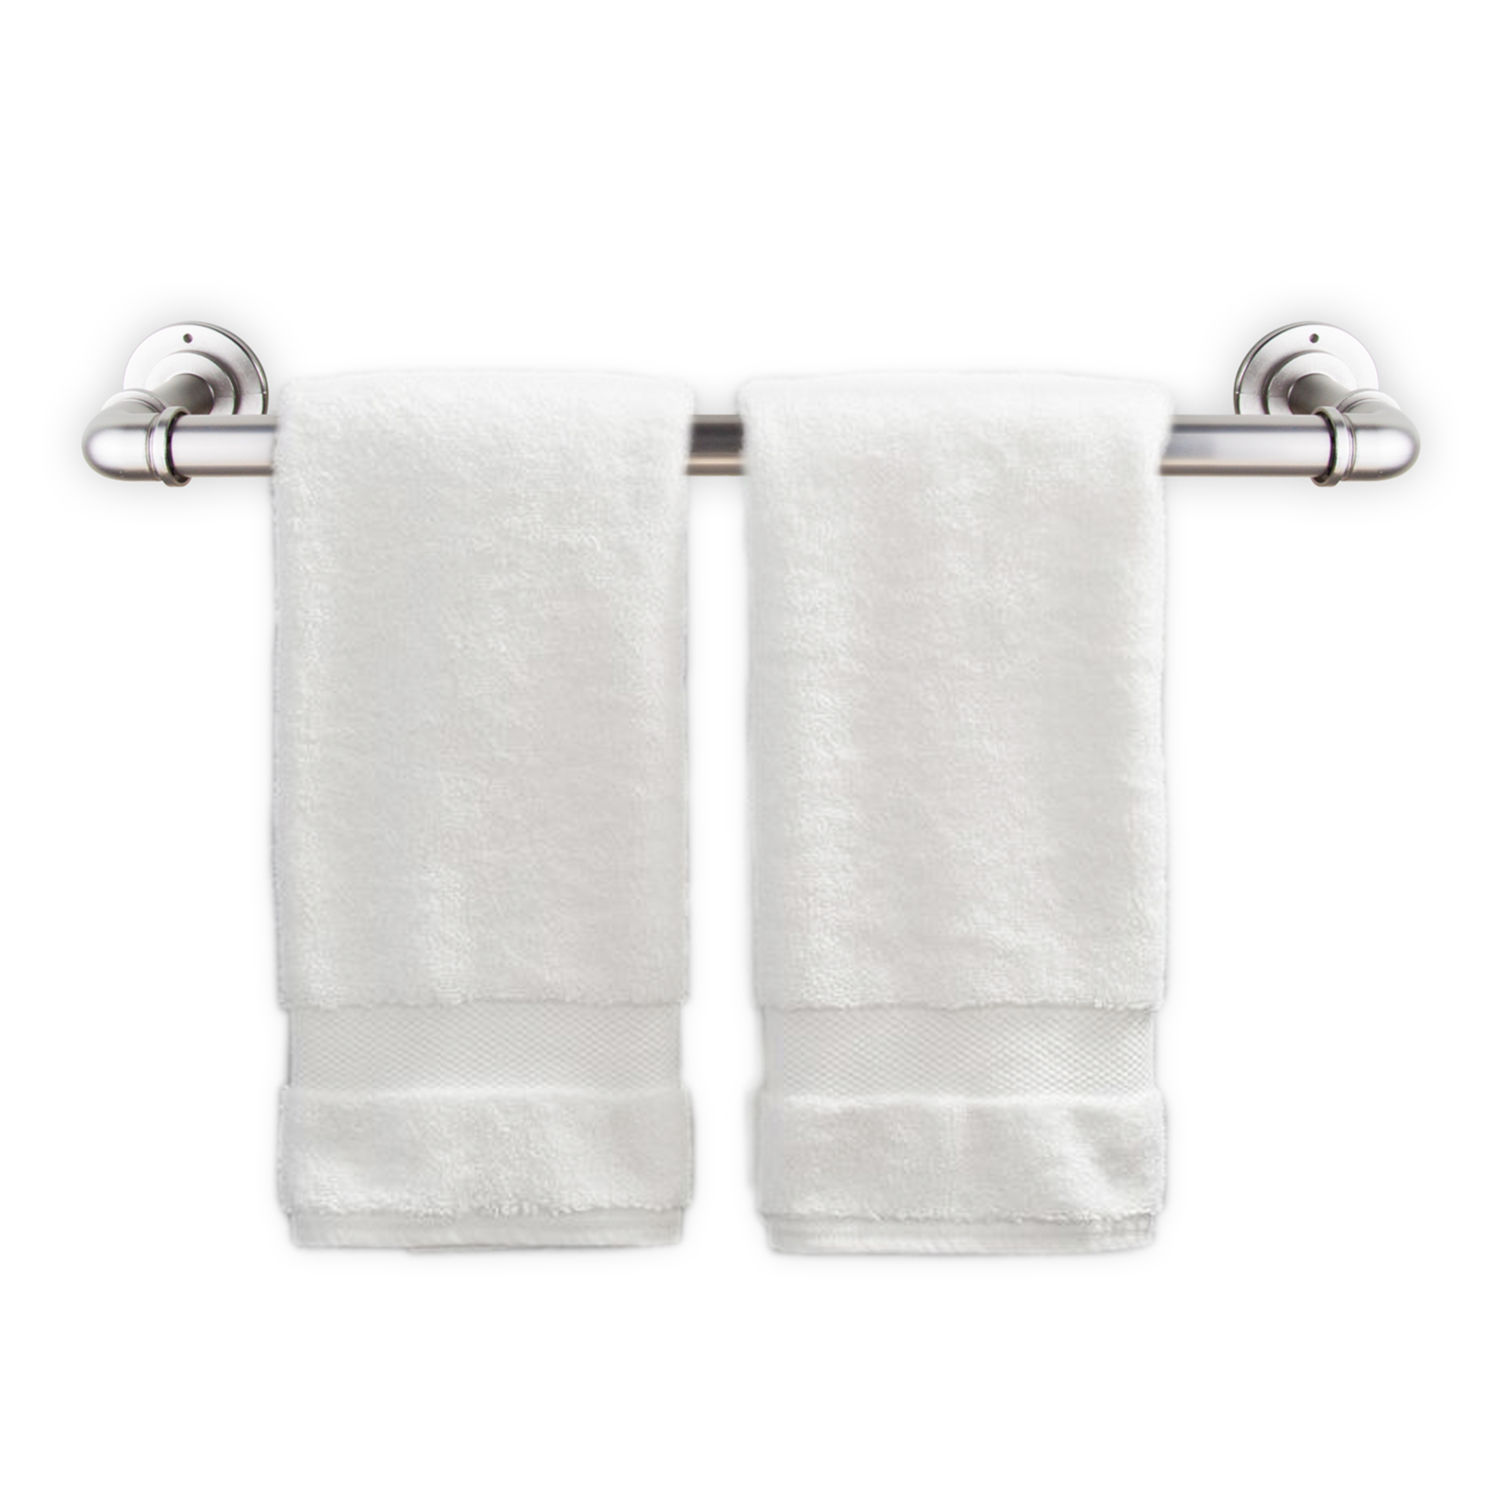 Towel Bars & Rings Category